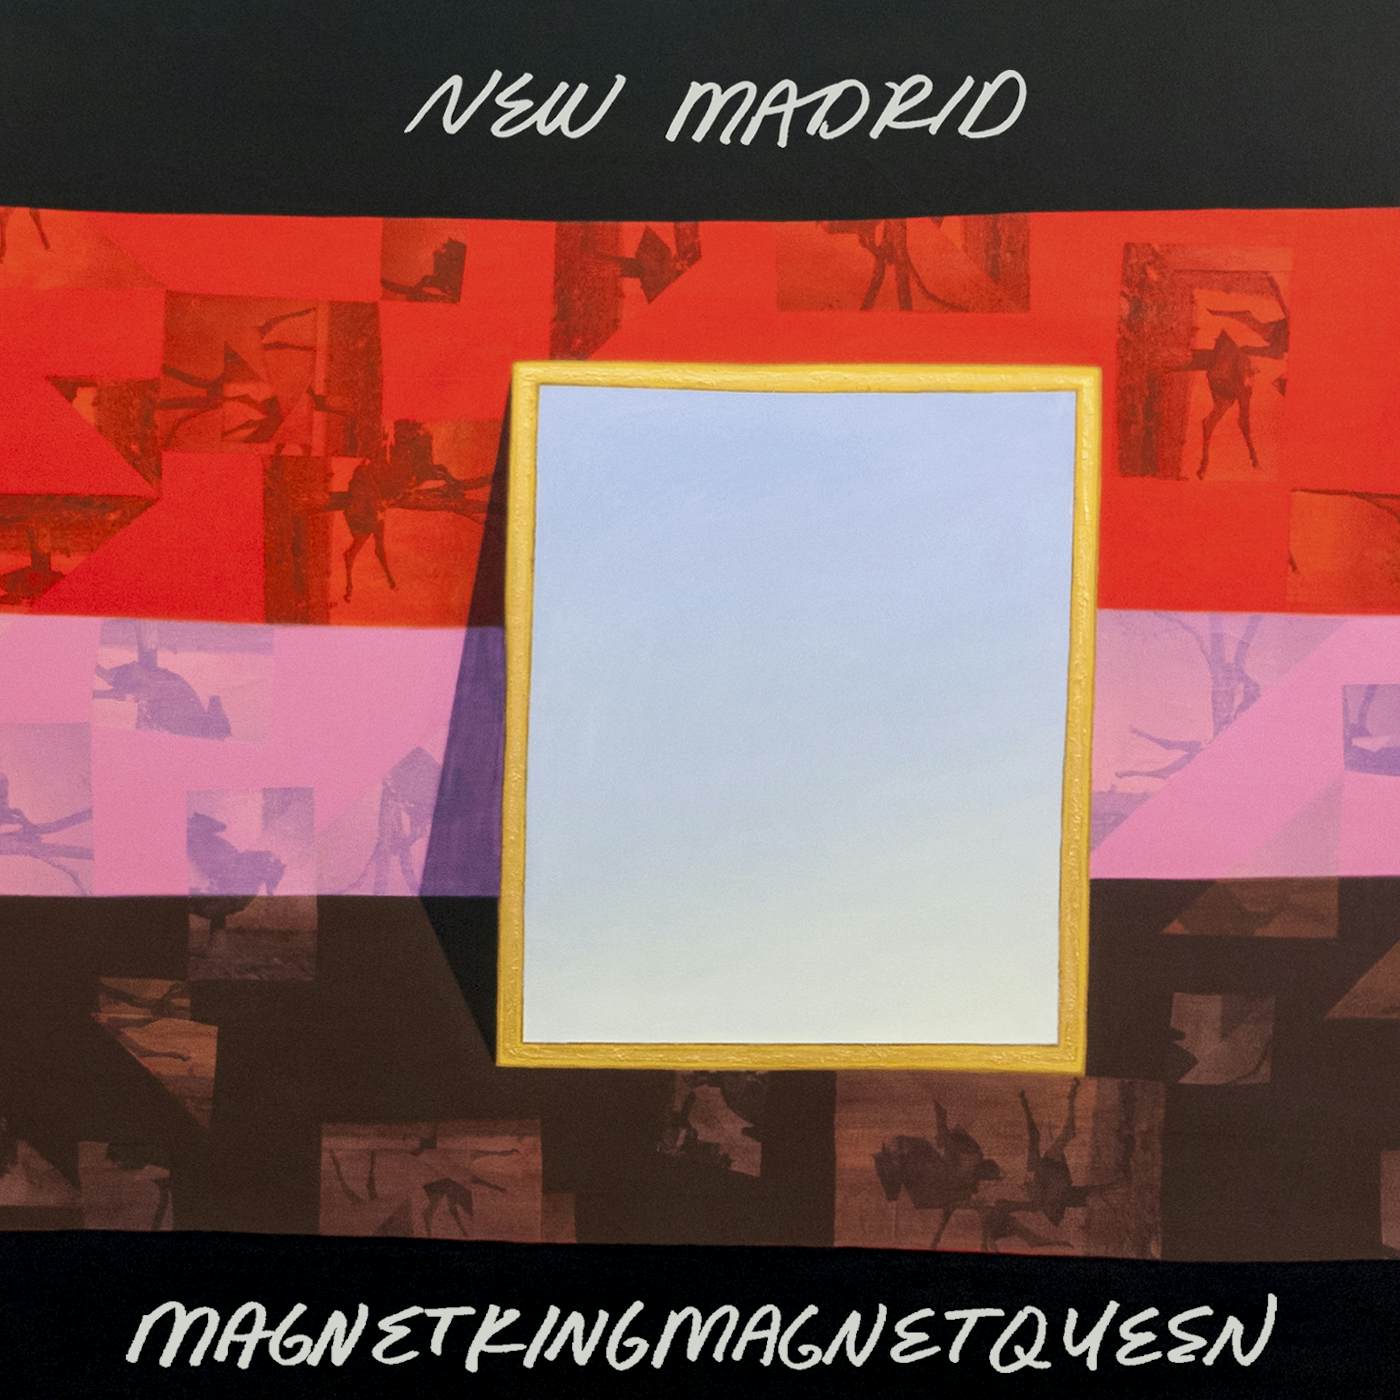 New Madrid magnetkingmagnetqueen Vinyl Record